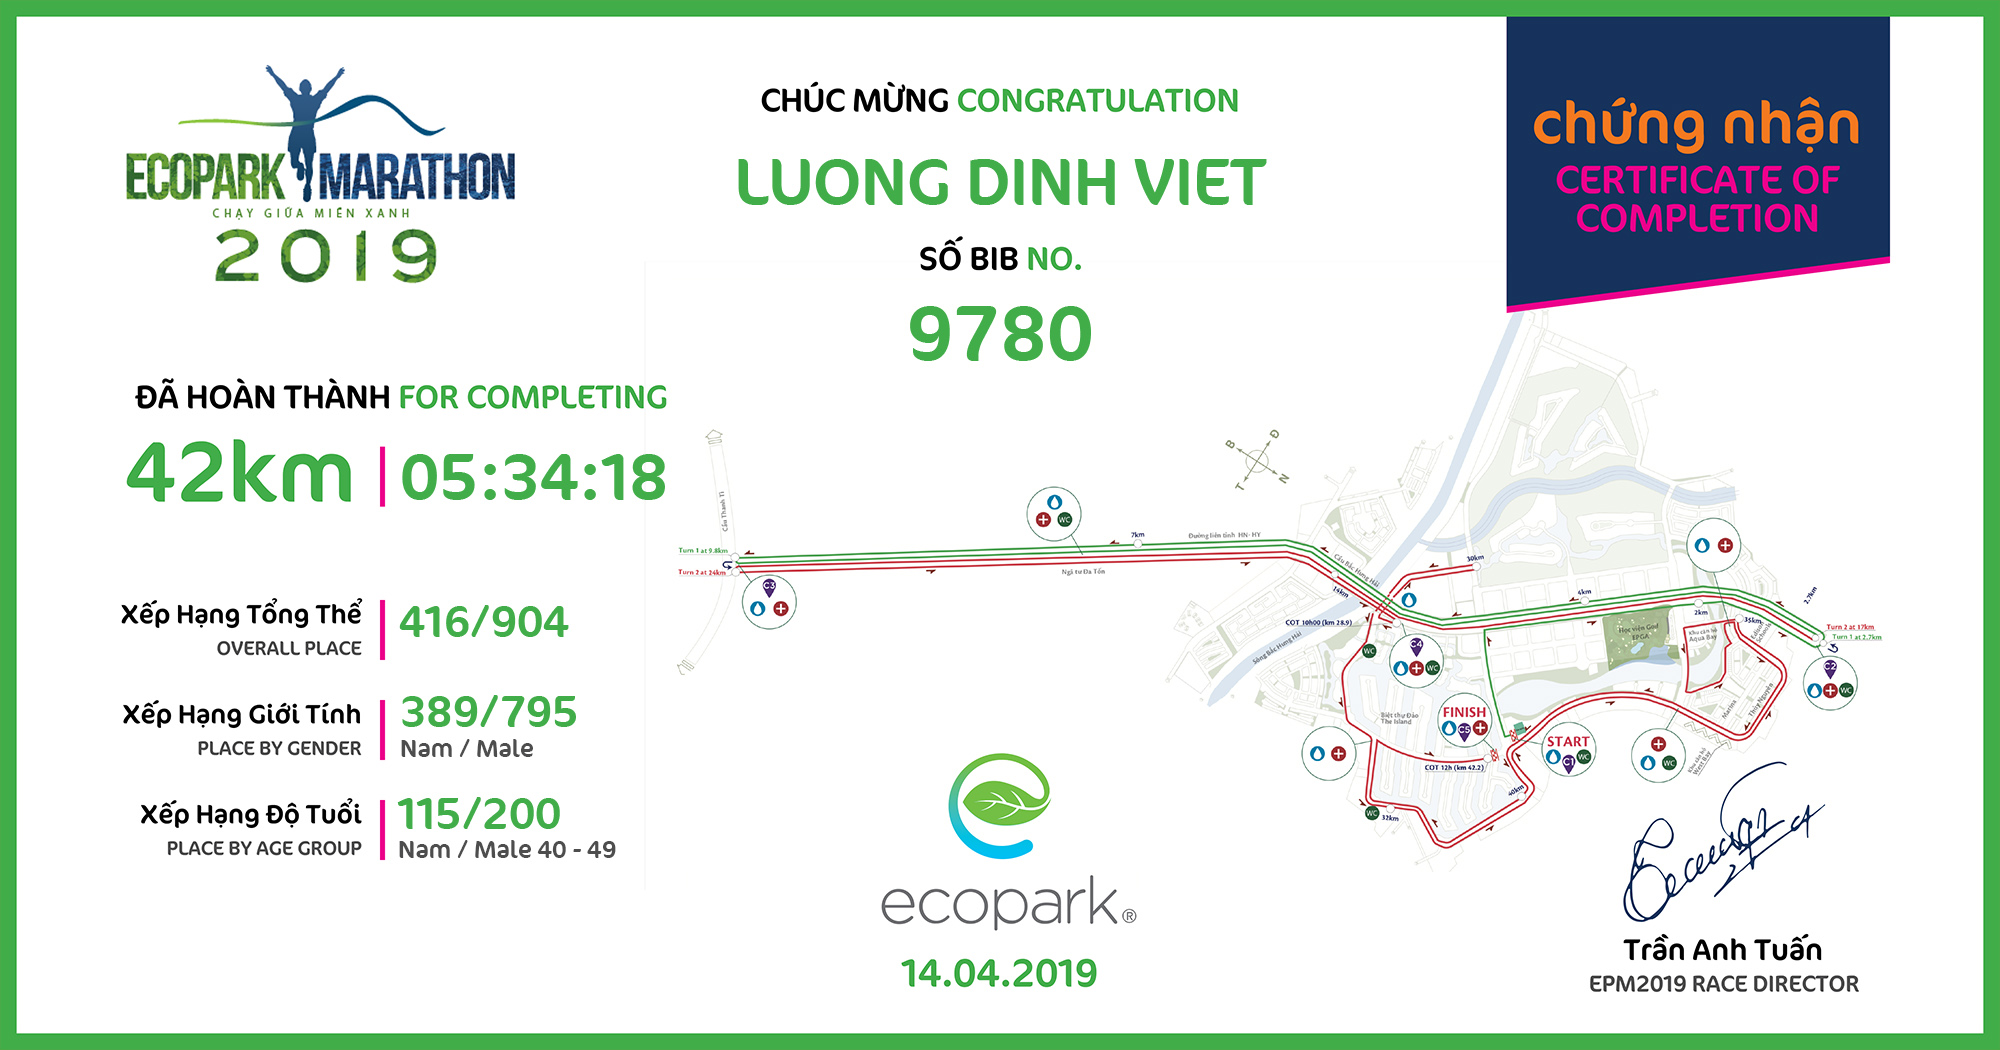 9780 - Luong Dinh Viet